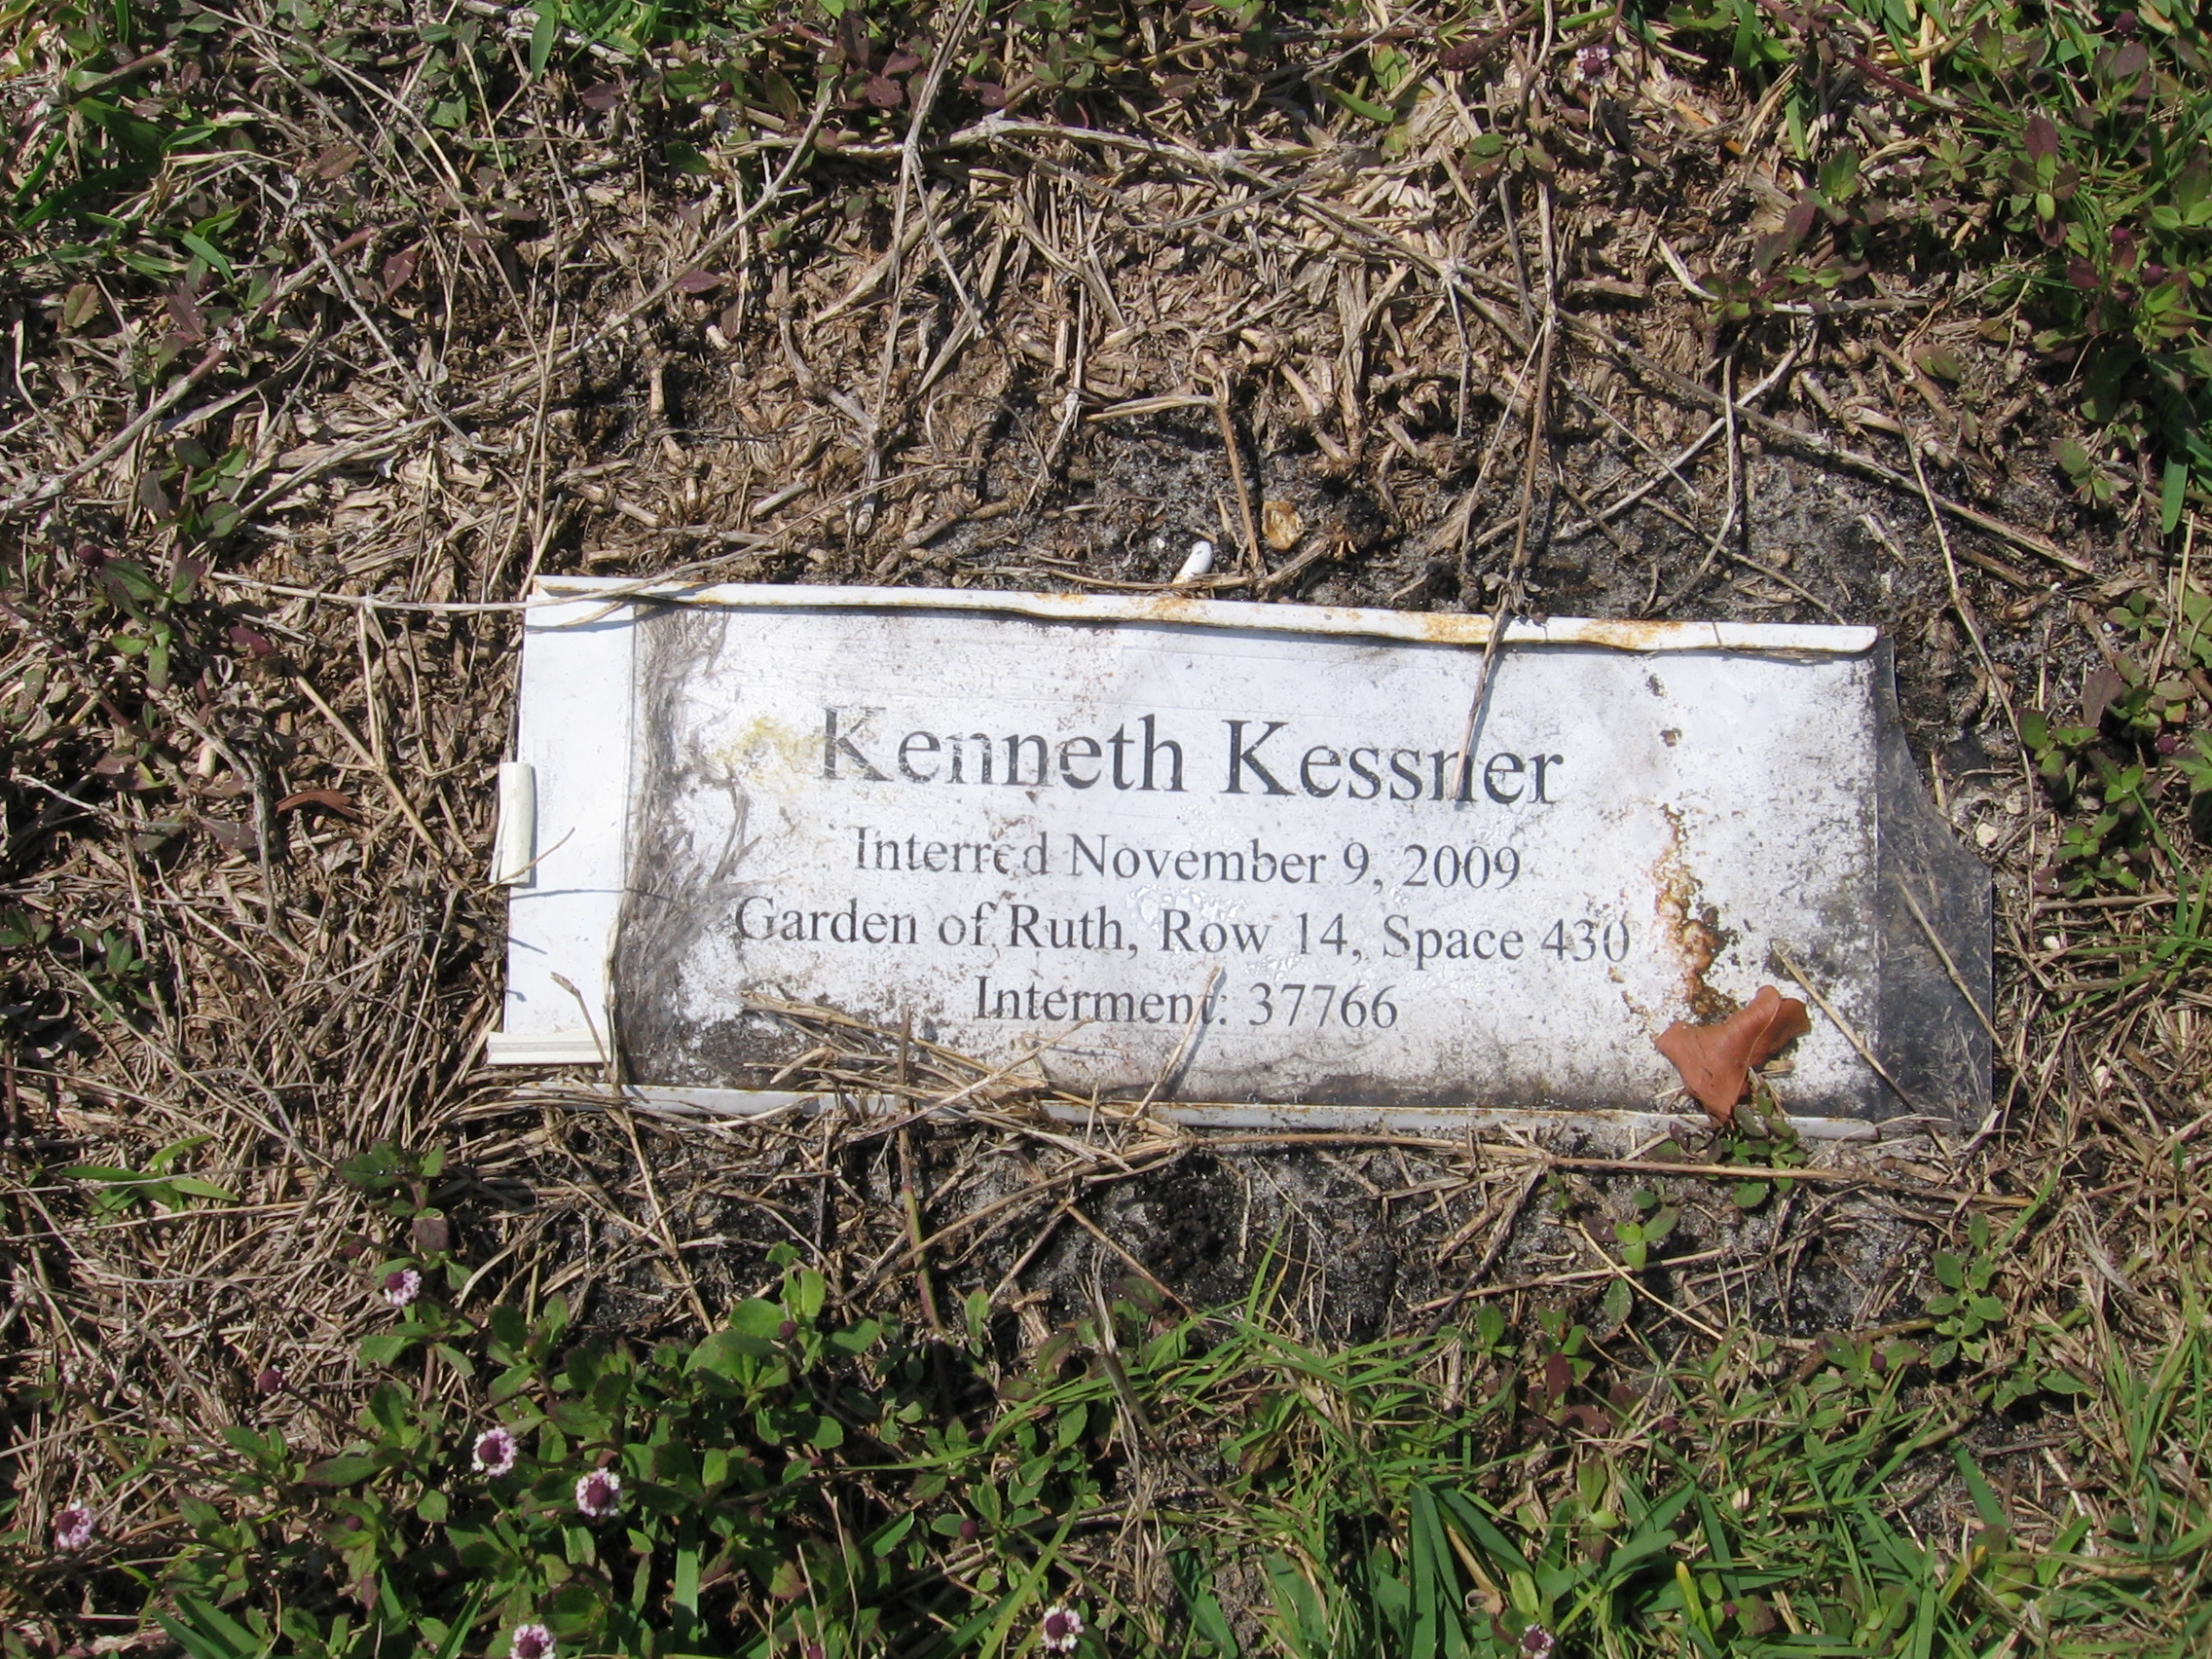 Kenneth Kessner